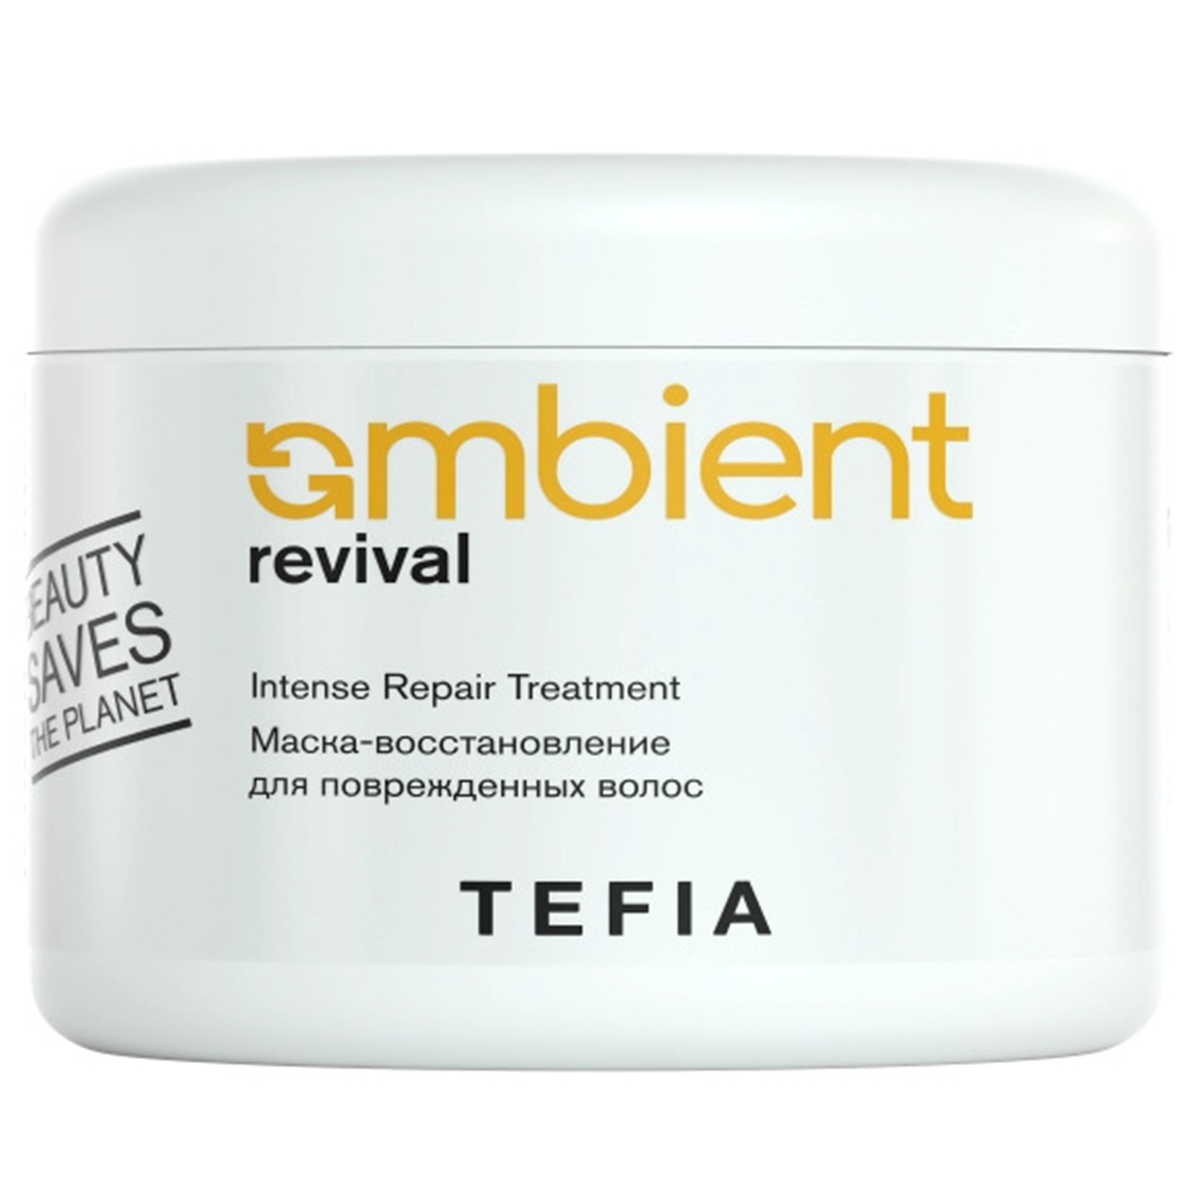 Tefia Маска-восстановление для поврежденных волос, 500 мл (Tefia, Ambient) tefia спрей филлер для поврежденных волос 250 мл tefia ambient